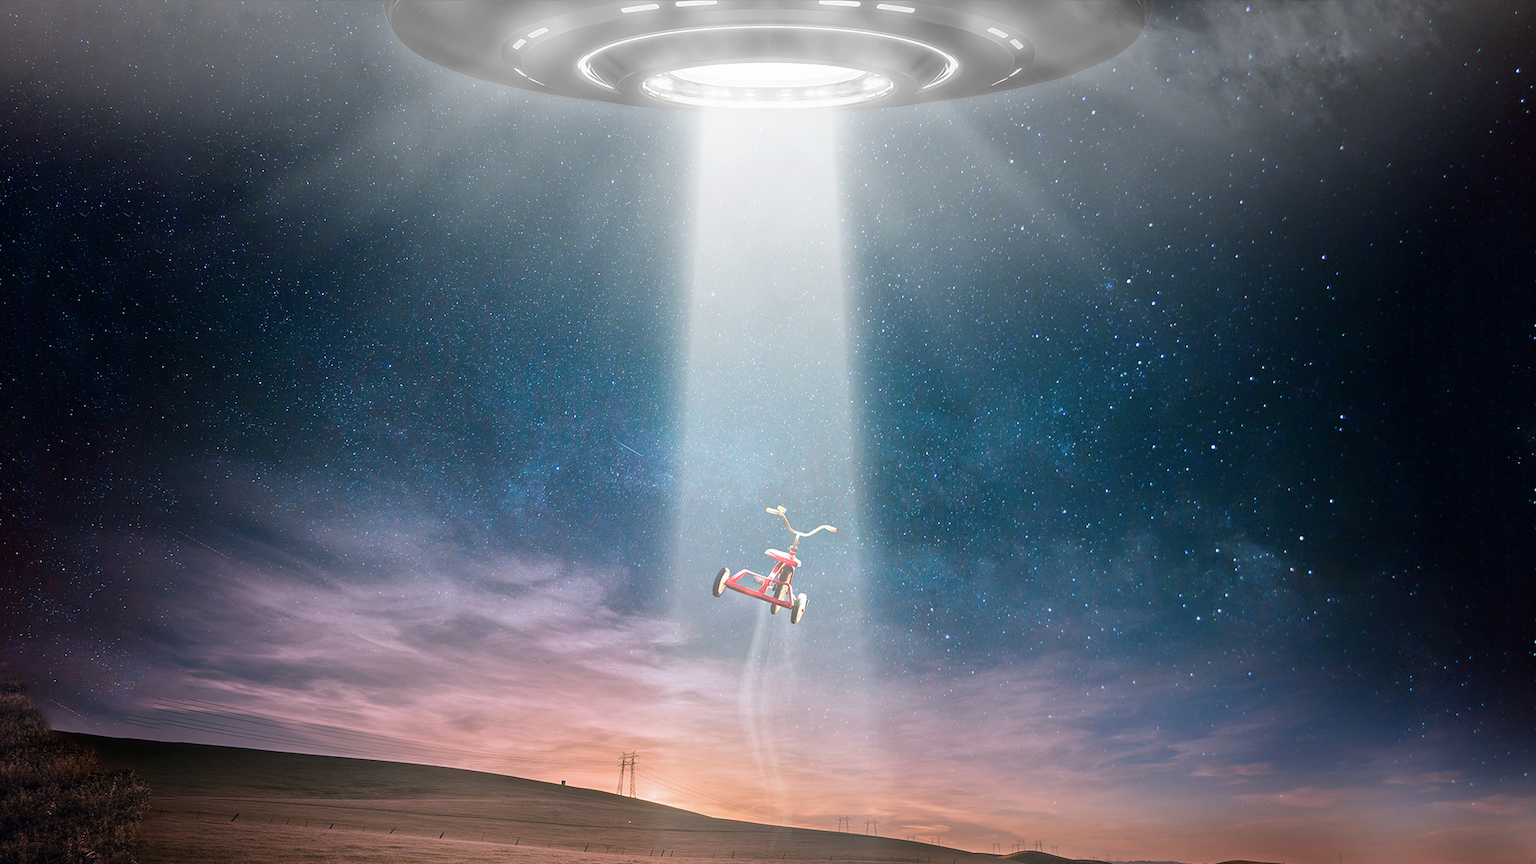 Alien abductions: What explains this phenomenon? - Big Think